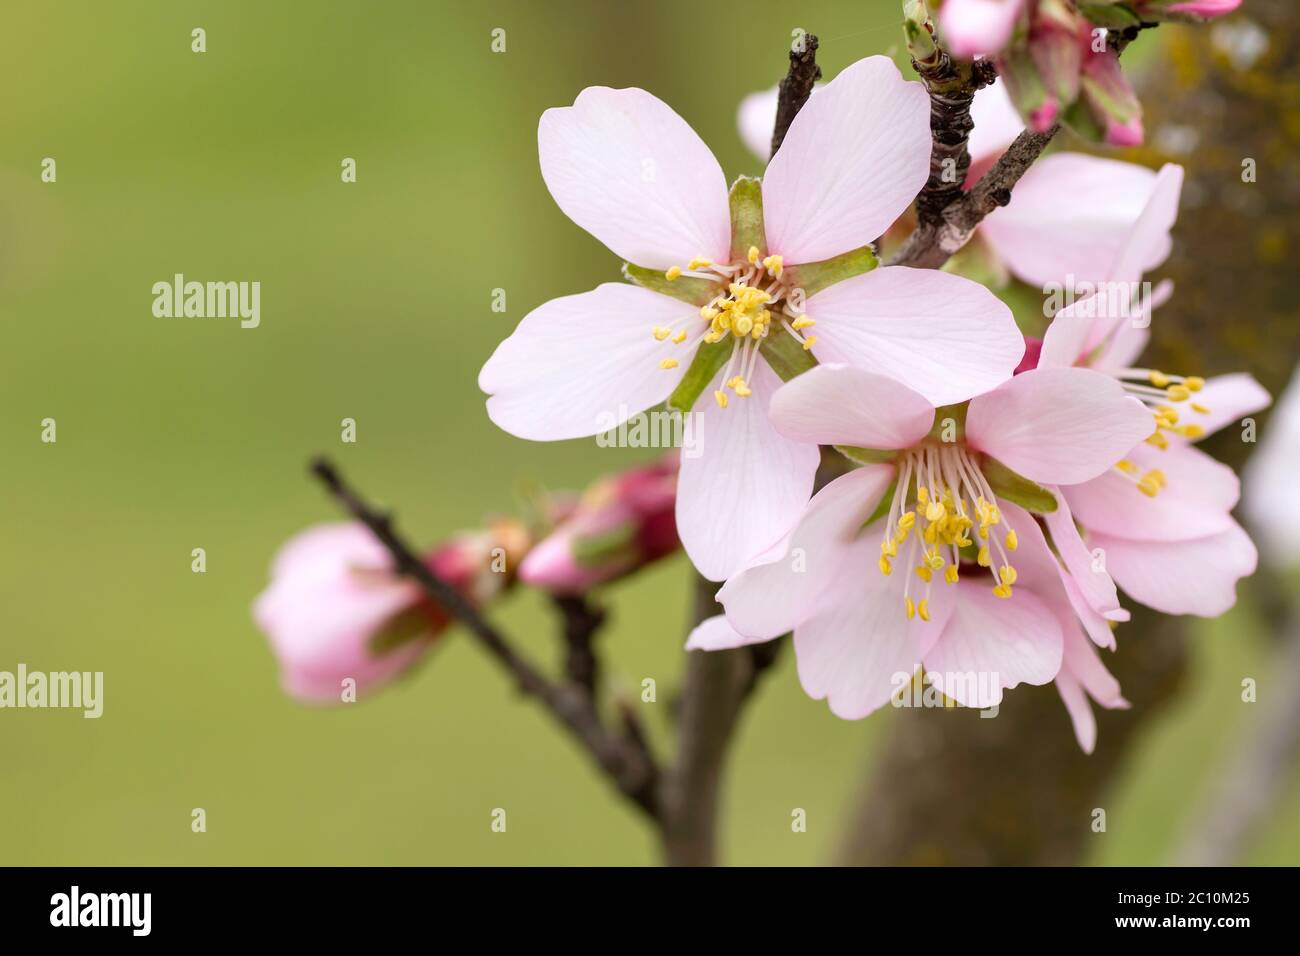 Detail of prunus dulcis pink flowers blooming Stock Photo - Alamy